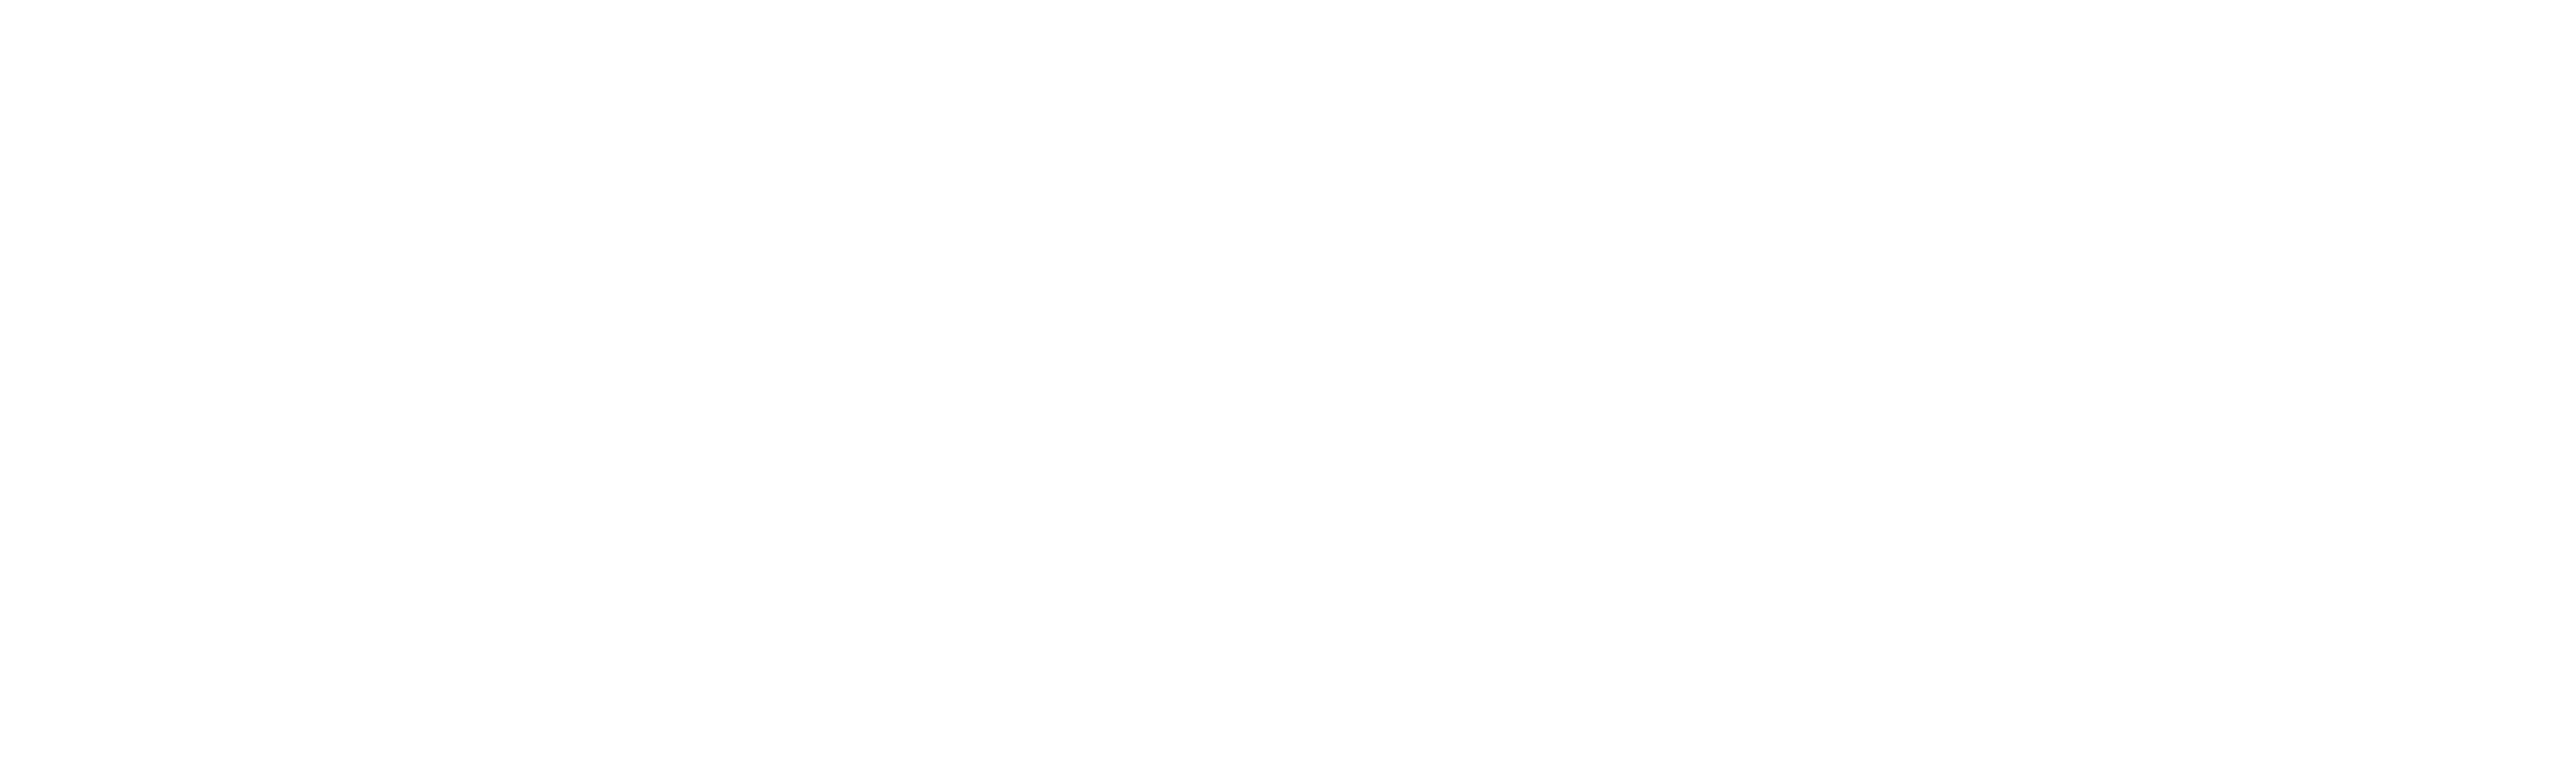 Holy Cross Saints Constantine & Helen Greek Orthodox Church